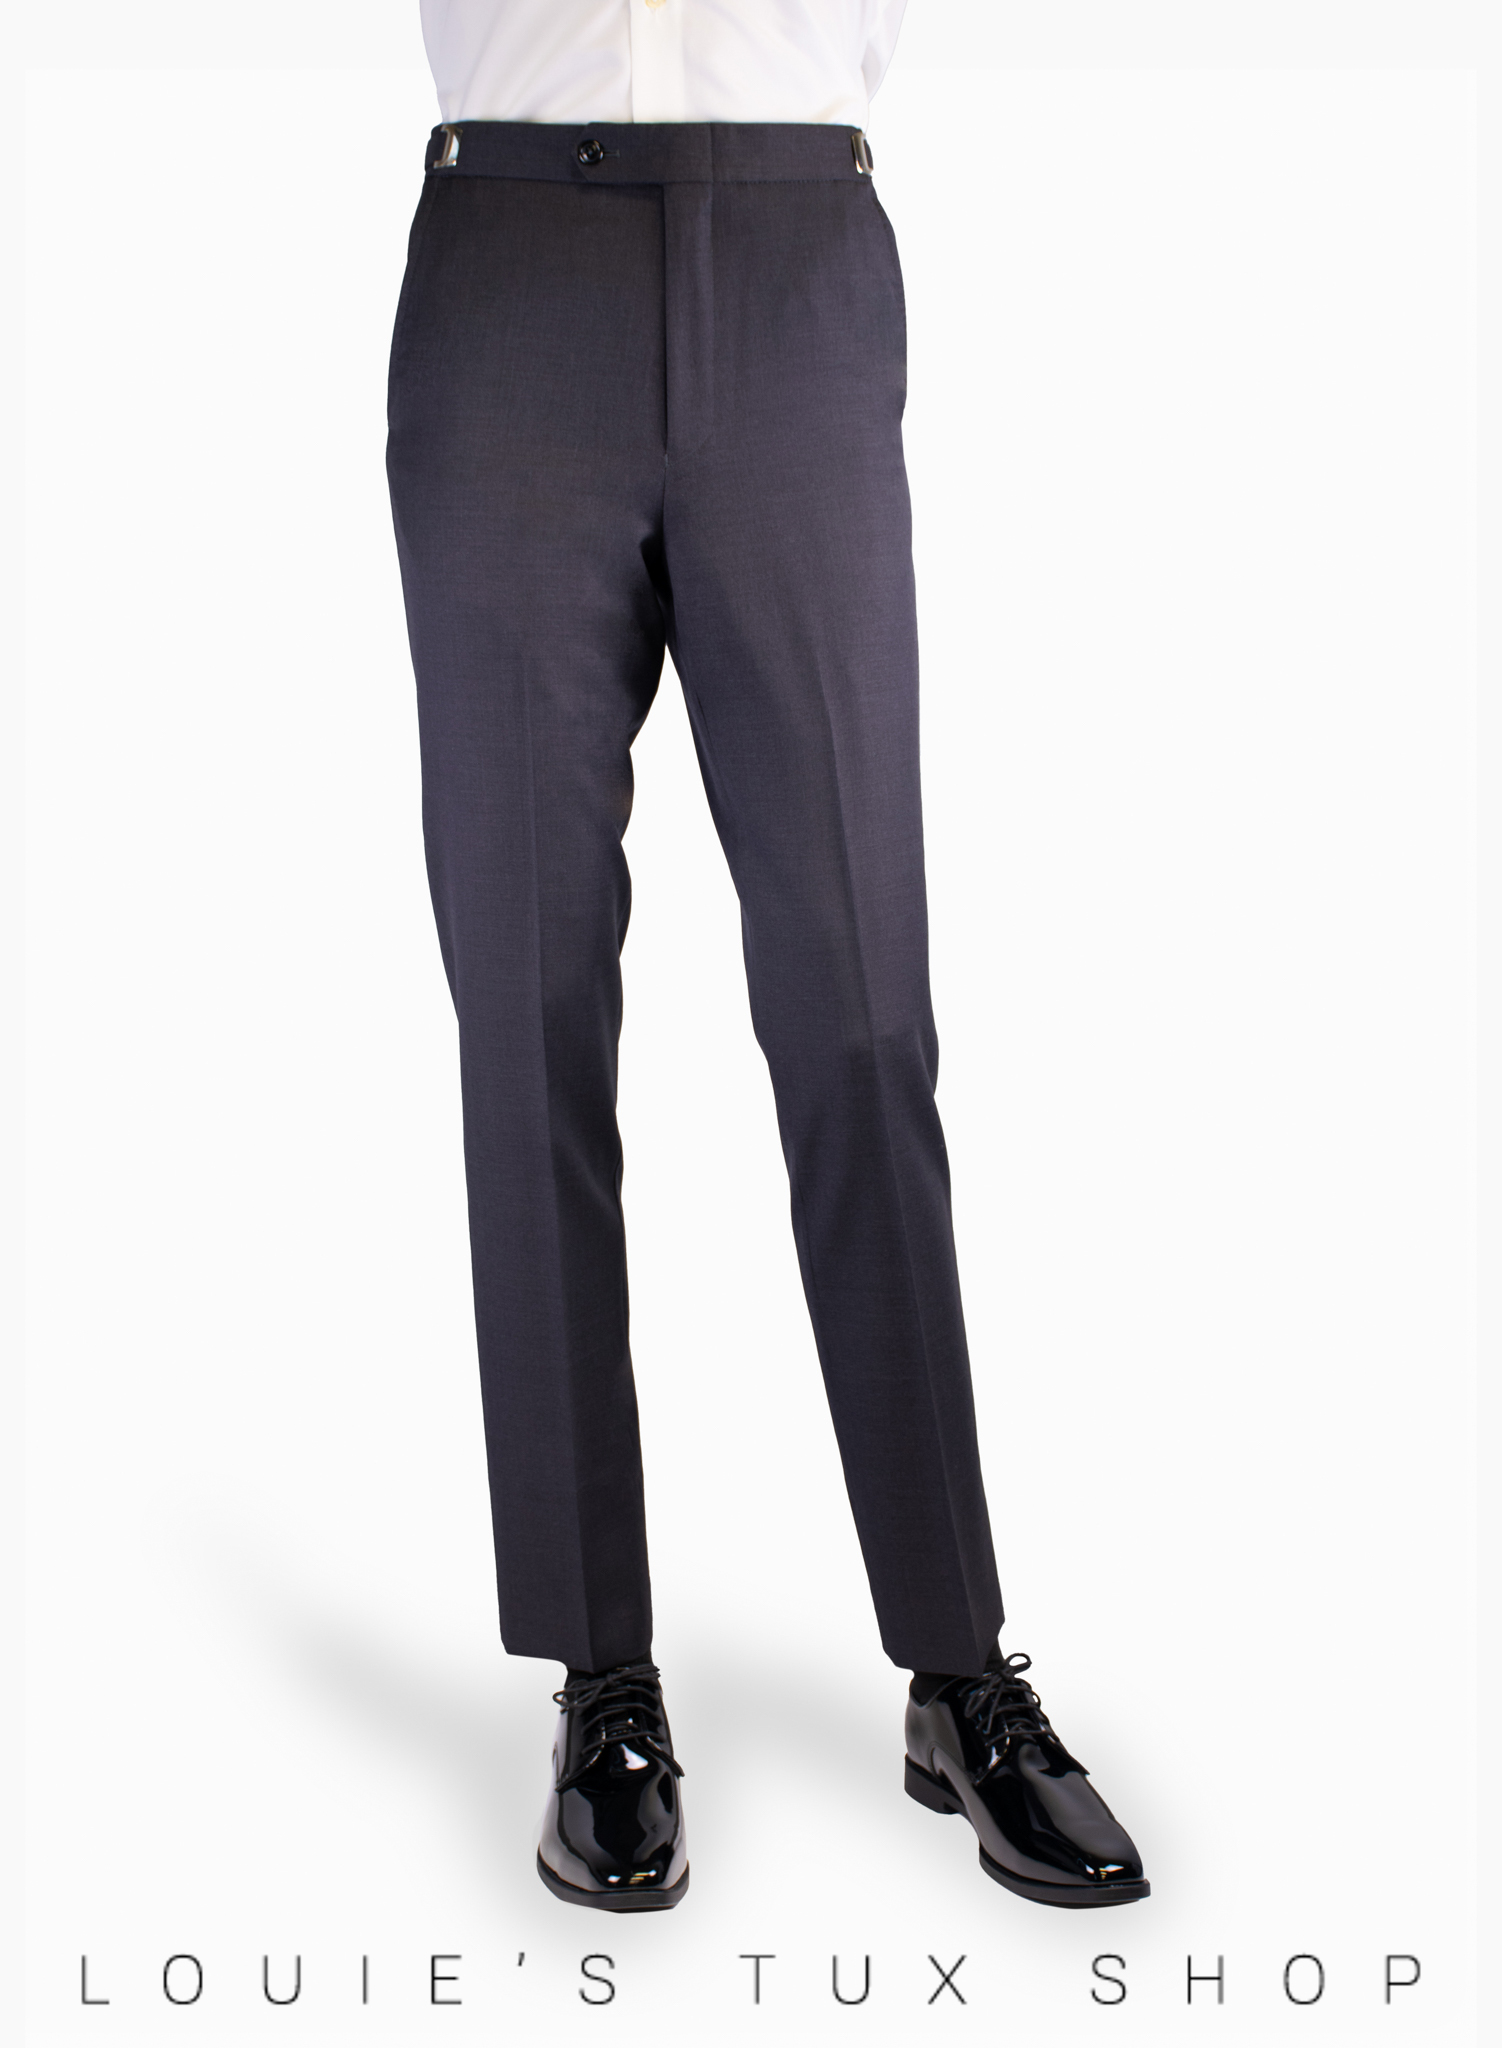 Nordstrom Rack Dress Pants Mens 32x32 Charcoal Gray Flat Front Business  Formal | eBay